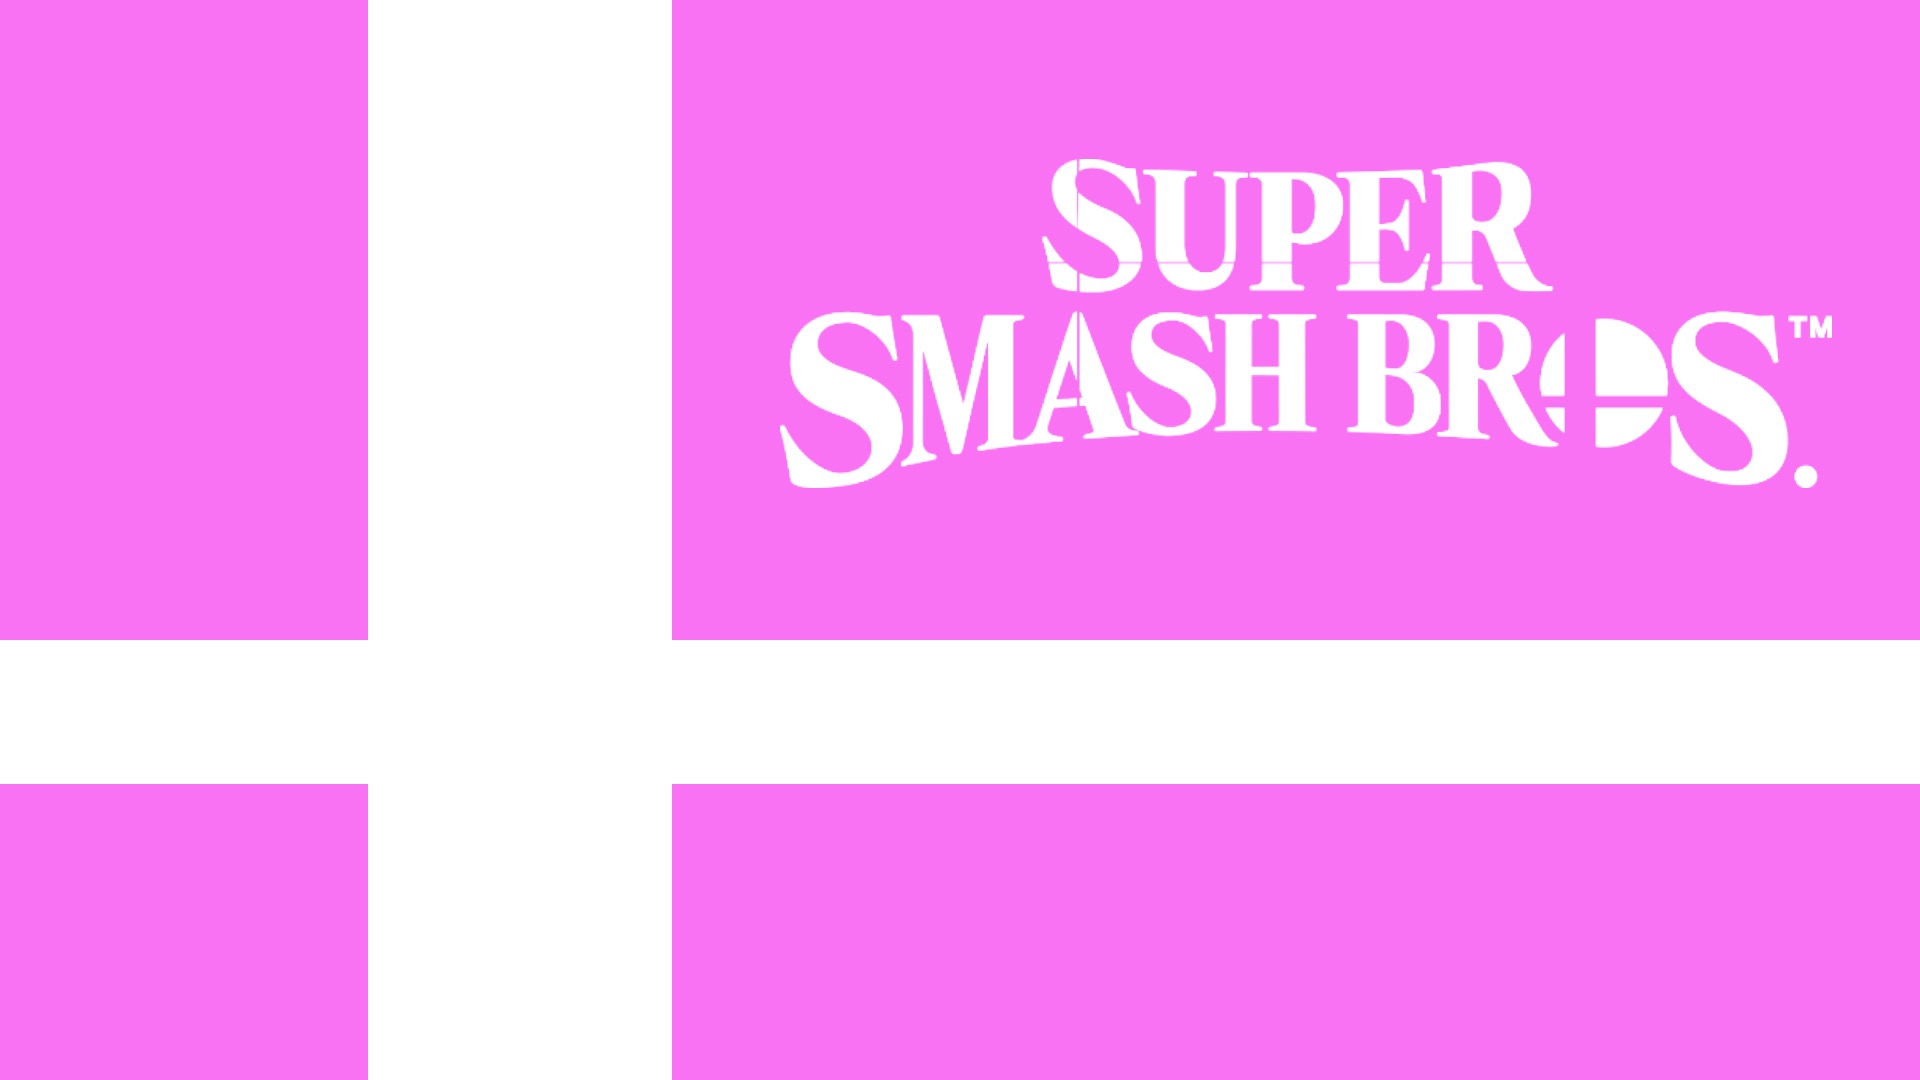 Descarga gratuita de fondo de pantalla para móvil de Videojuego, Nintendô Ôru Sutâ Dairantô Sumasshu Burazâzu, Super Smash Bros Ultimate.